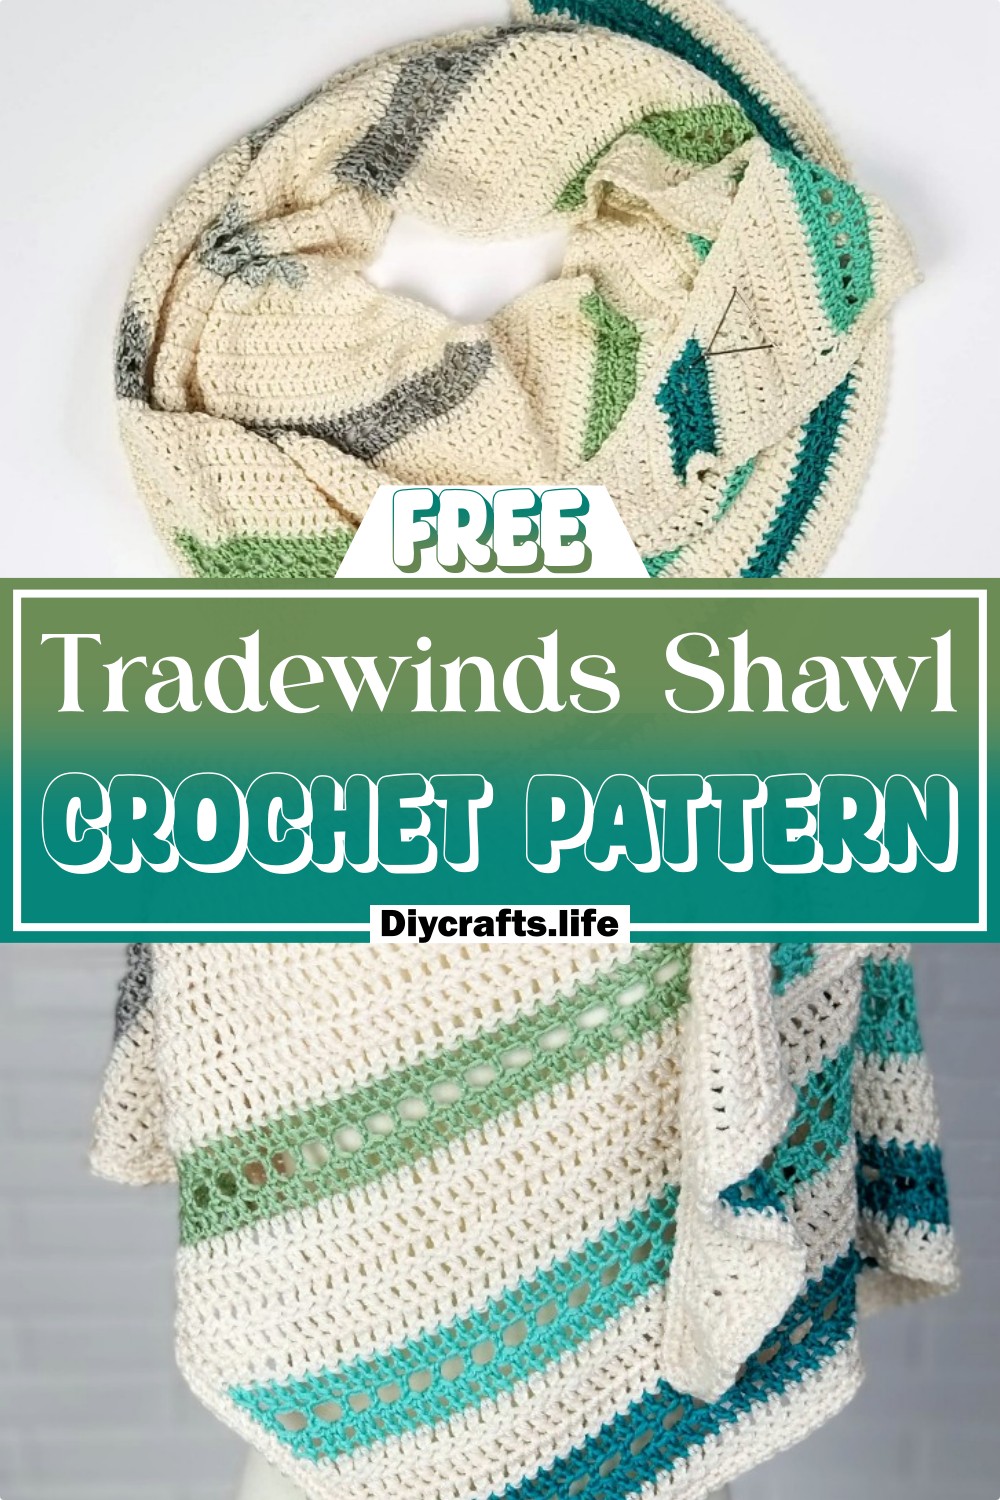 Tradewinds Shawl Free Crochet Pattern